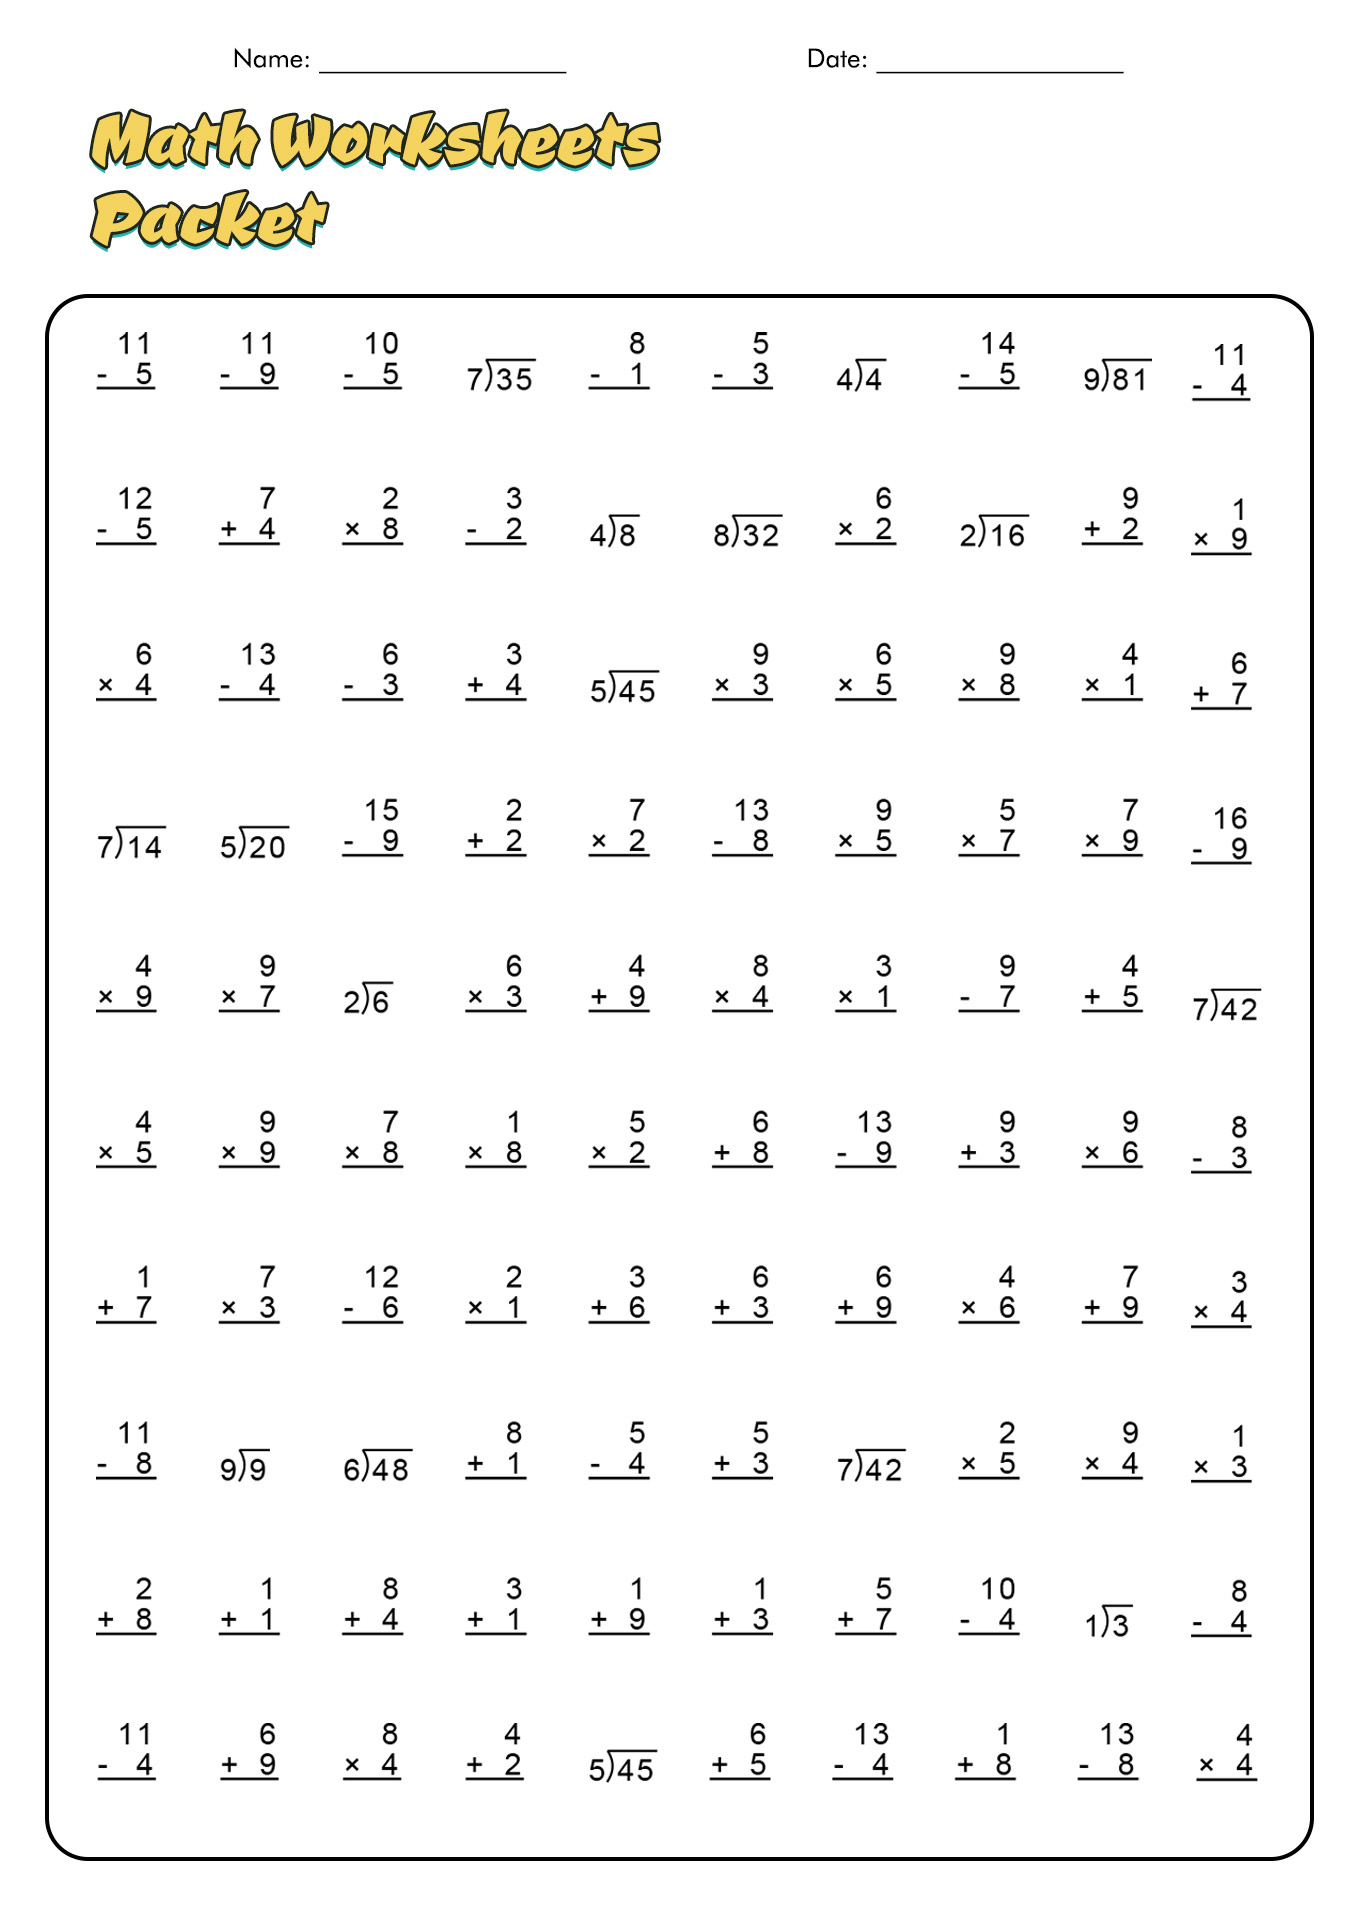 4th Grade Math Worksheet Packet Image